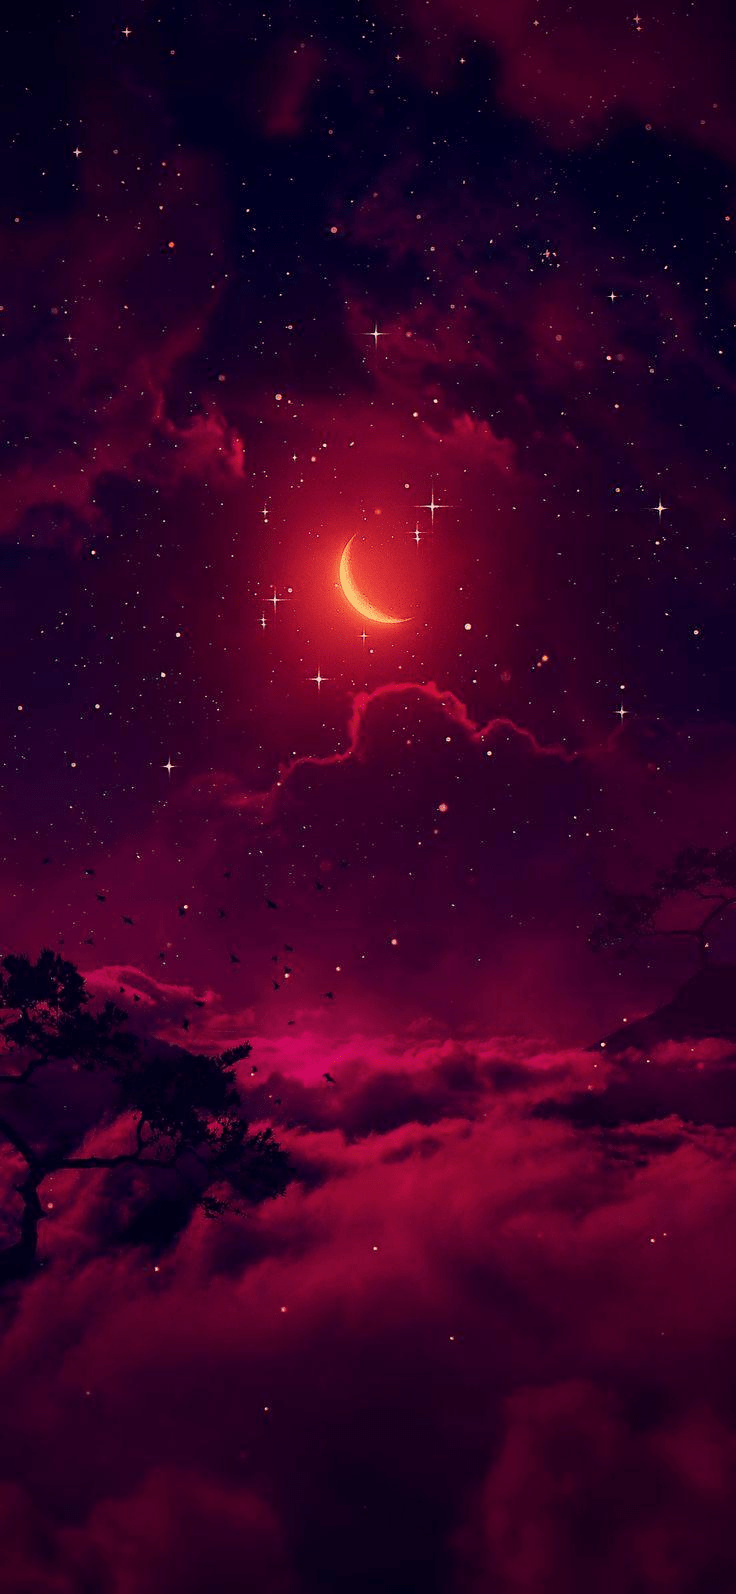 13) Crimson evening : aesthetic. Galaxy wallpaper, Pretty wallpaper background, Galaxies wallpaper